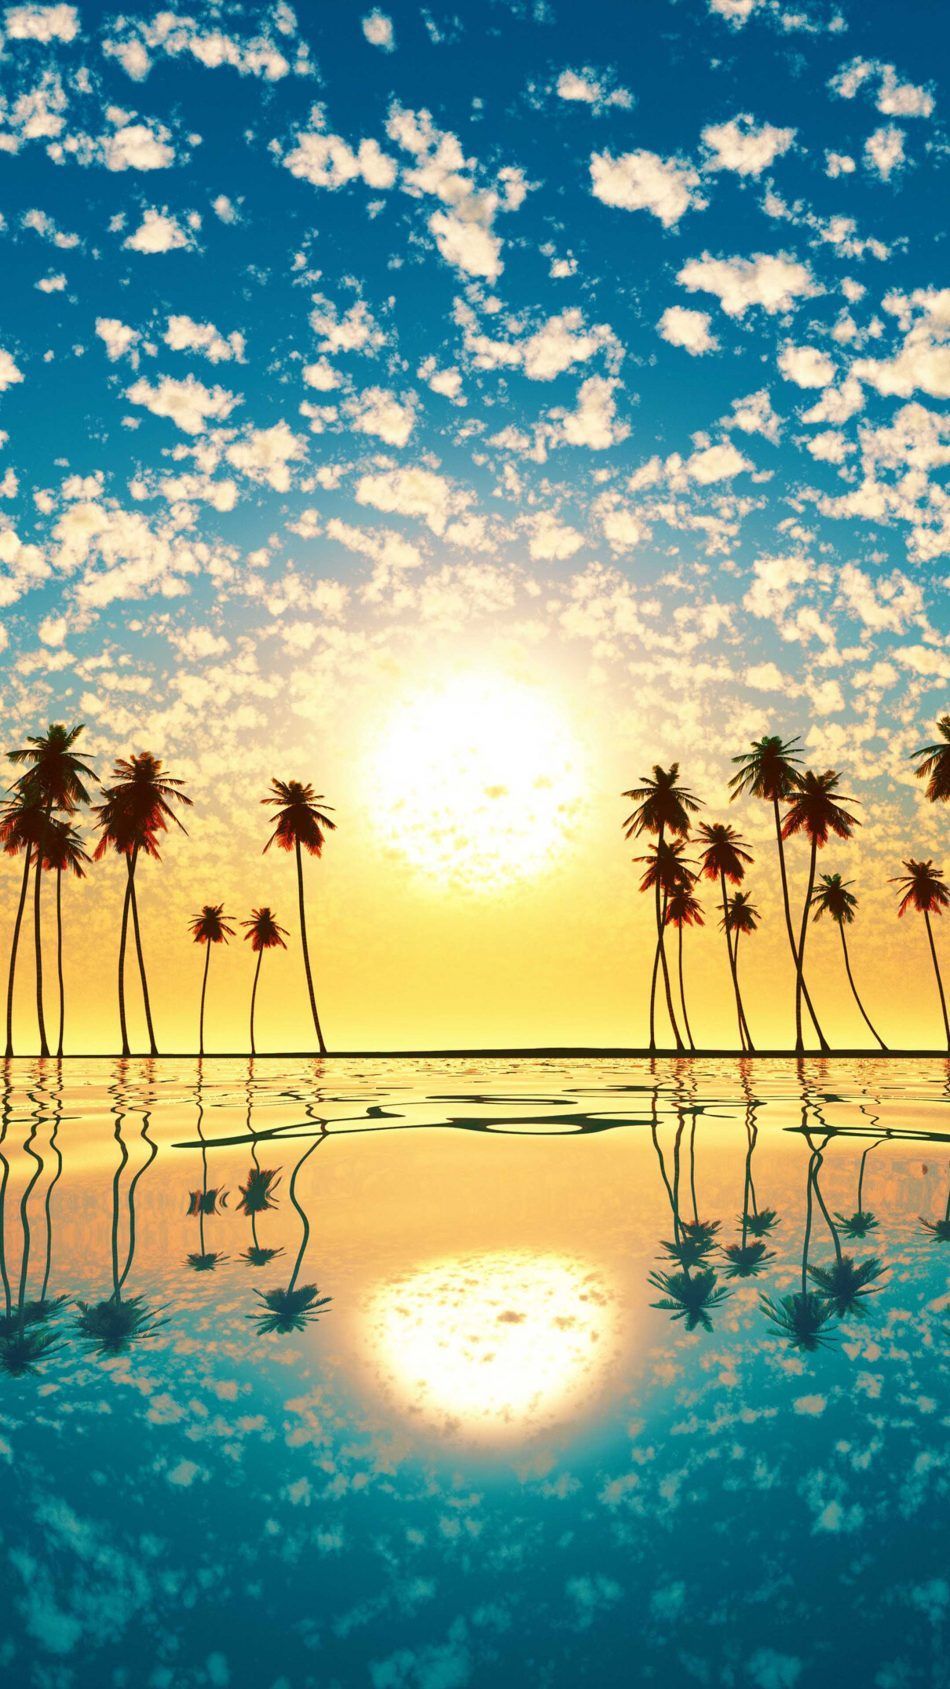 Sunset Palm Tree Cloud Sky Reflection 4K Ultra HD Mobile Wallpaper. Sunset wallpaper, Beach phone wallpaper, Best nature wallpaper